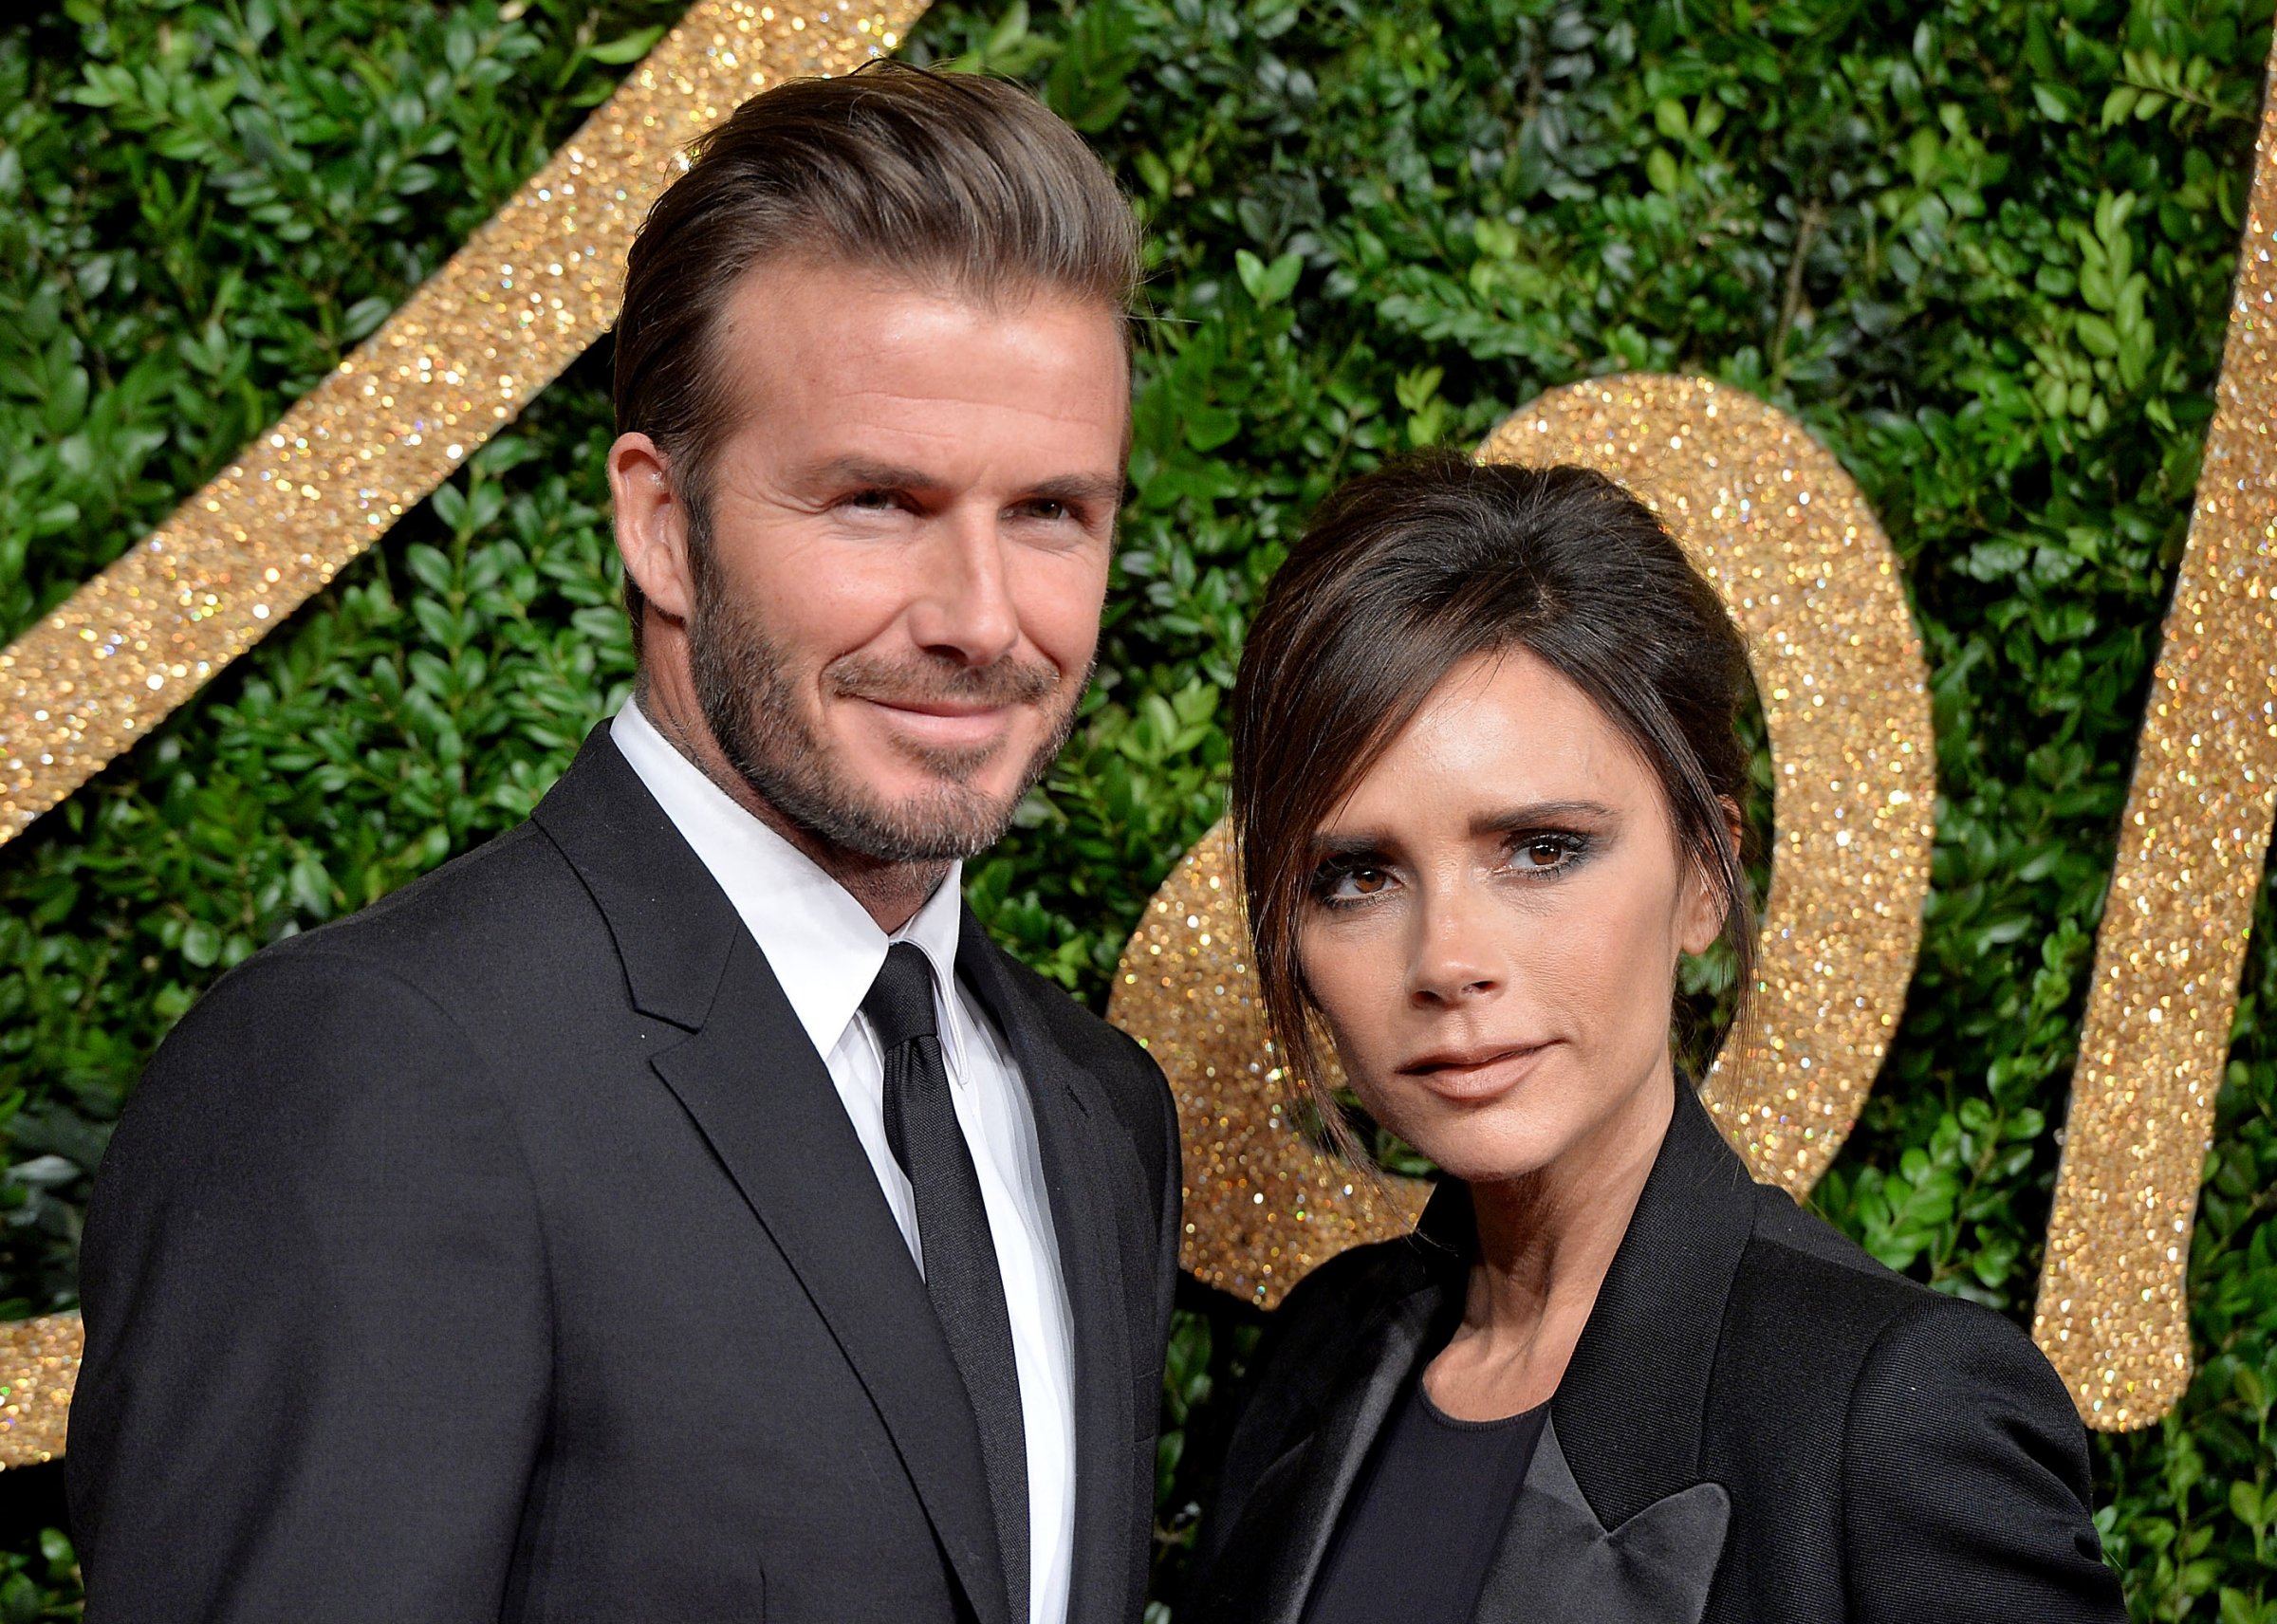 David Beckham and Victoria Beckham attend the British Fashion Awards 2015 at London Coliseum on November 23, 2015 in London, England.